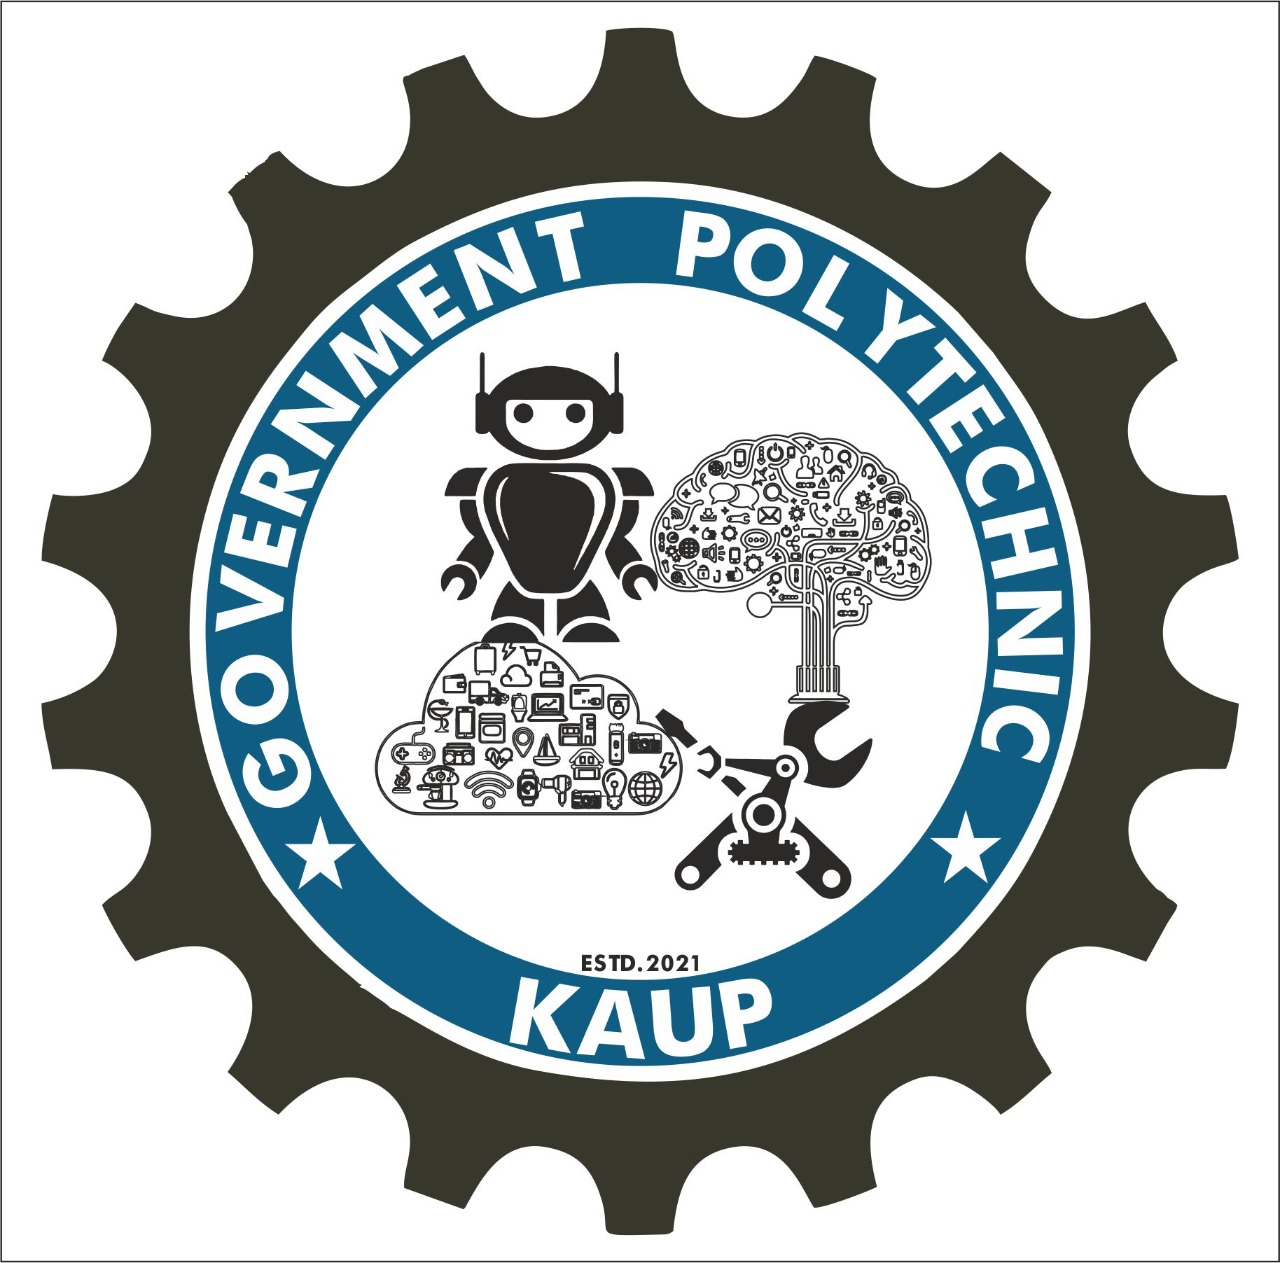 GOVERNMENT POLYTECHNIC KAUP